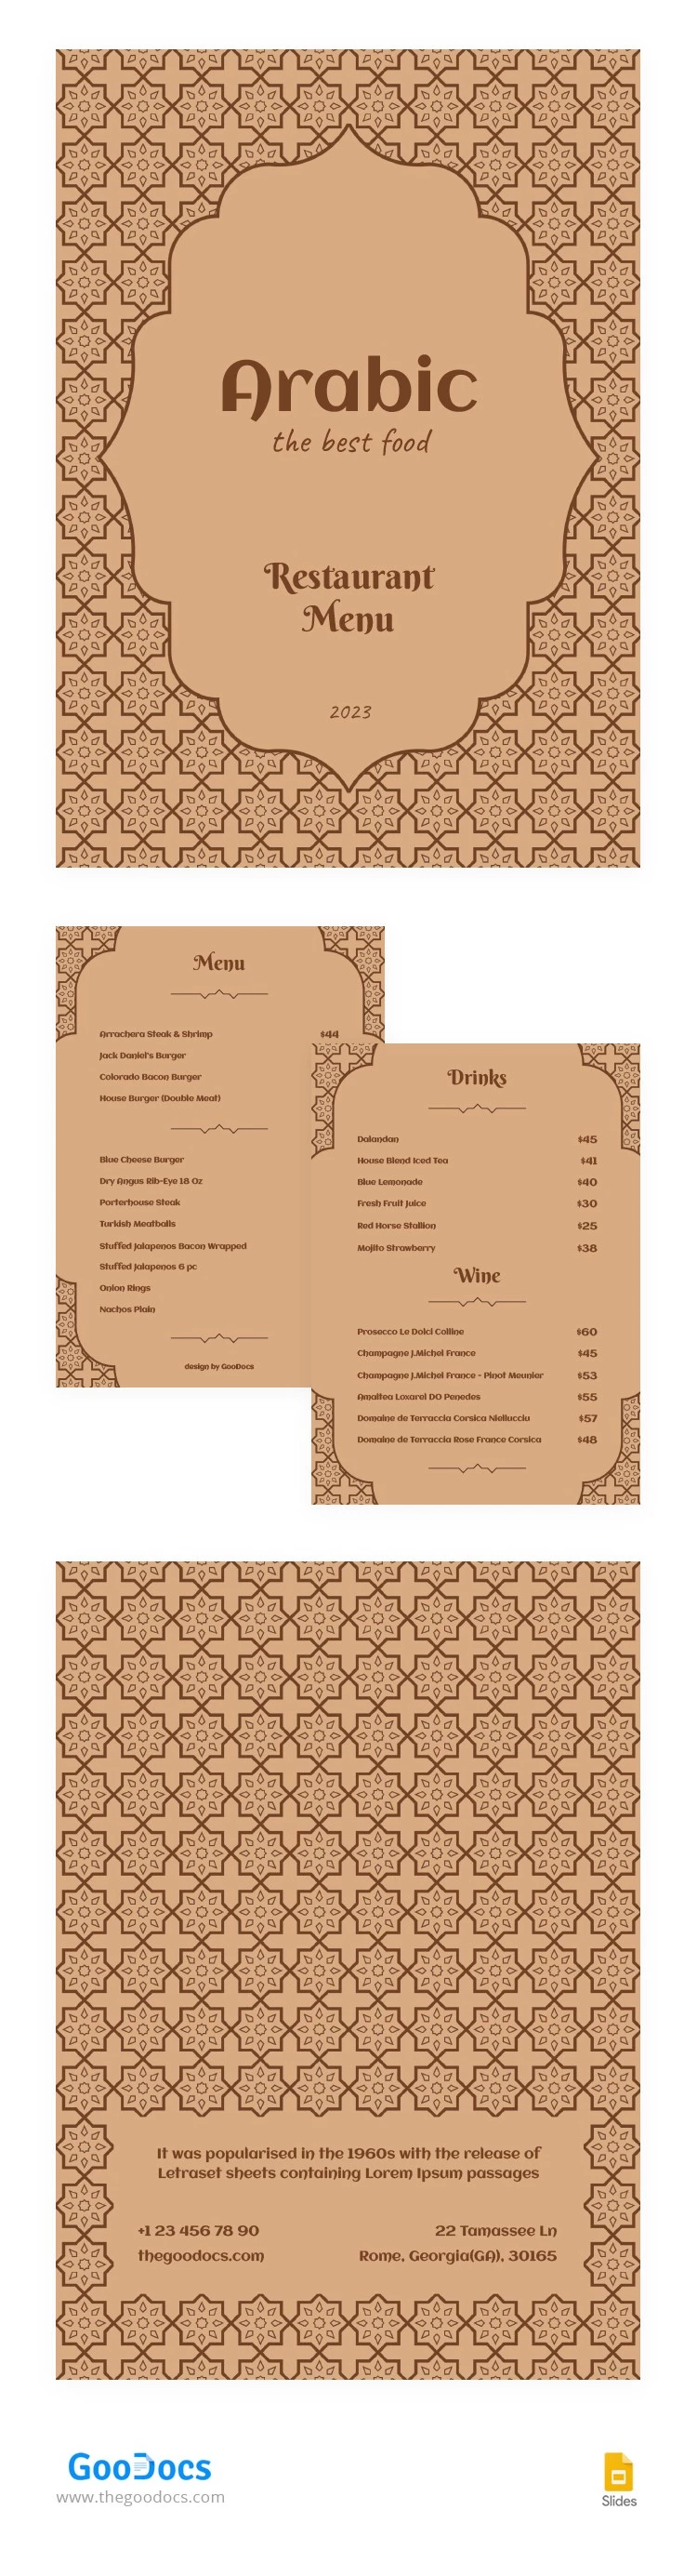 Menú hermoso del restaurante árabe. - free Google Docs Template - 10065275